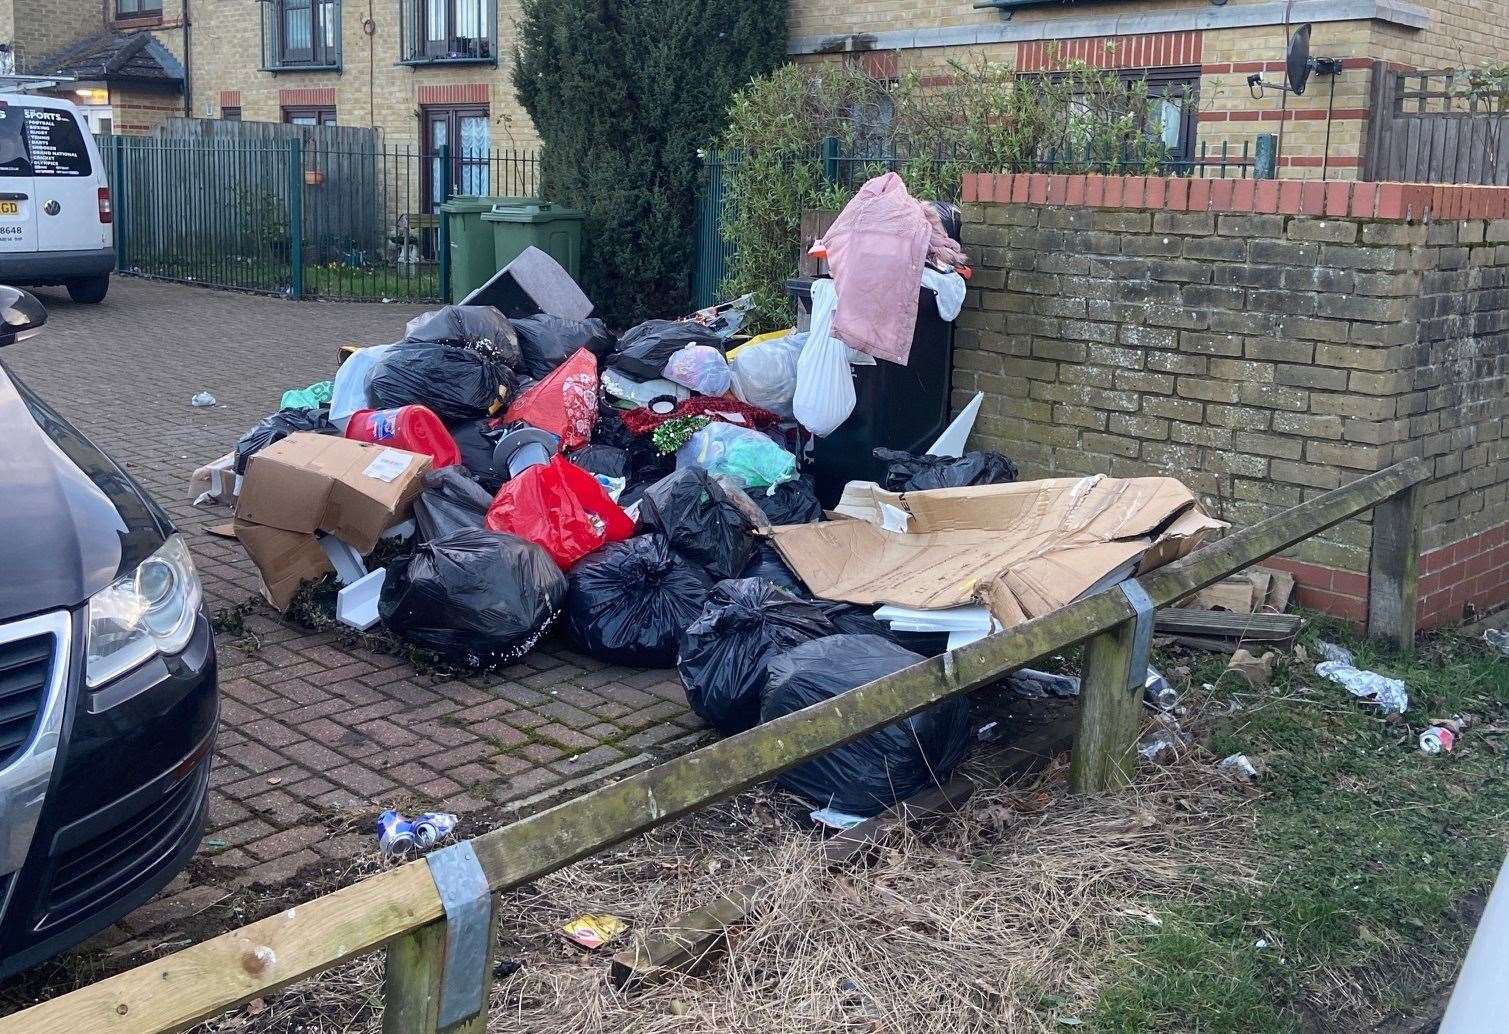 Westmorland Road rubbish. Picture Ben Sinden